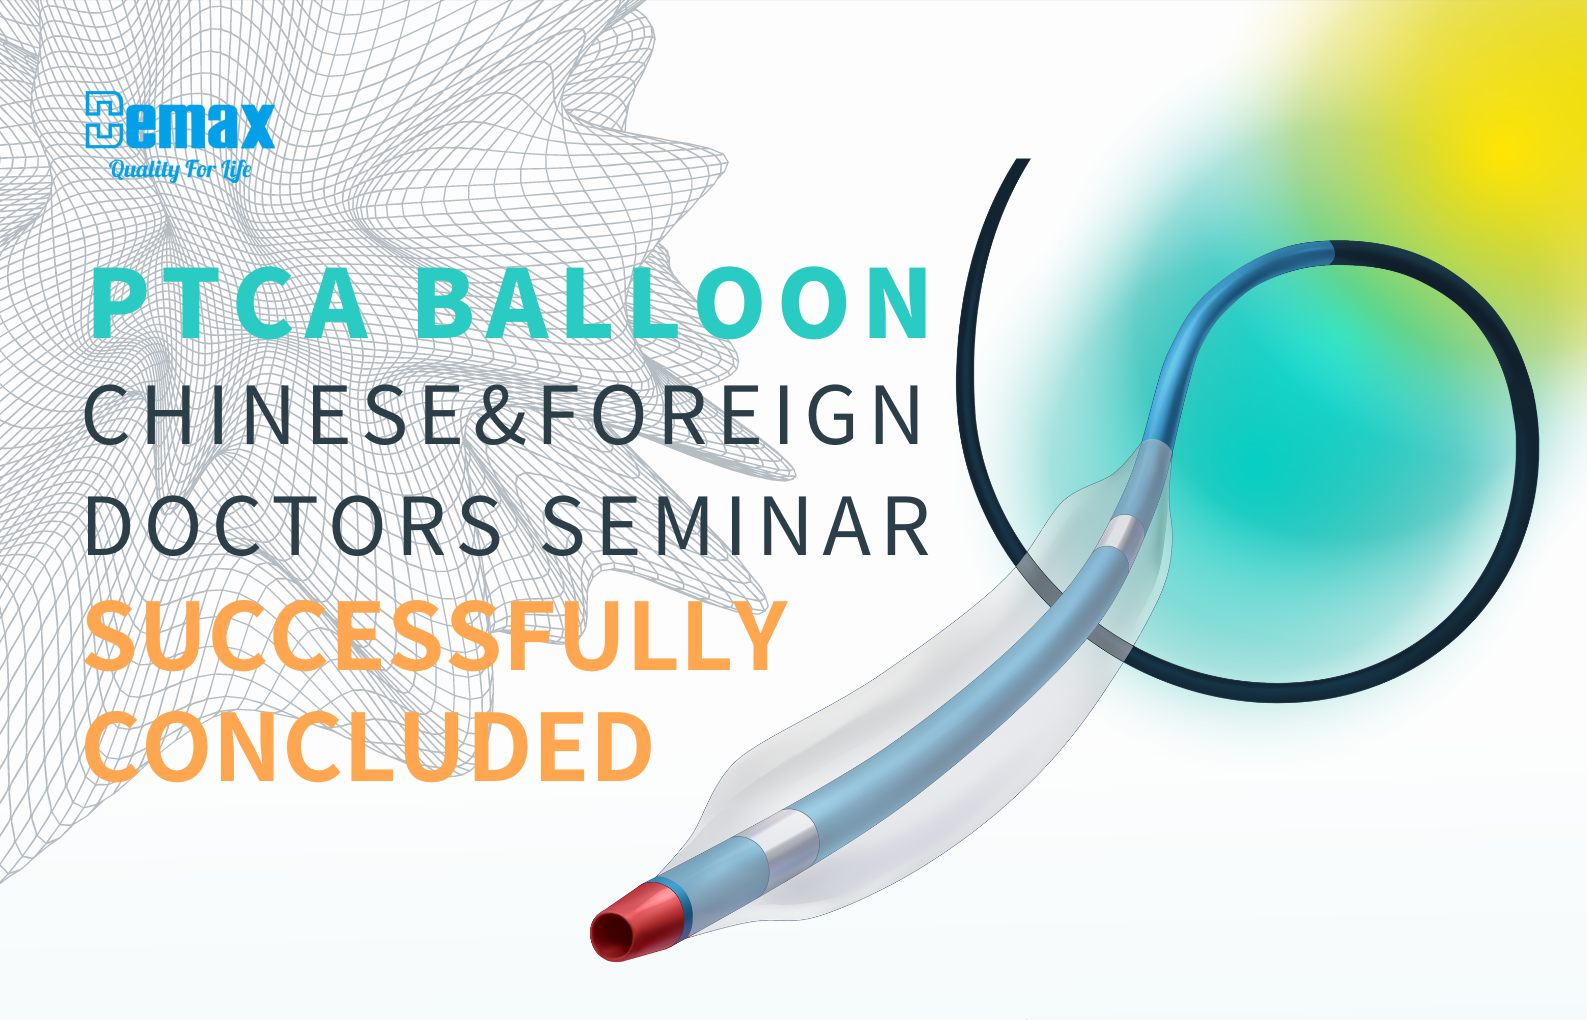 Demax PTCA Balloon Dilatation Catheter Academic Seminar Successfully concluded